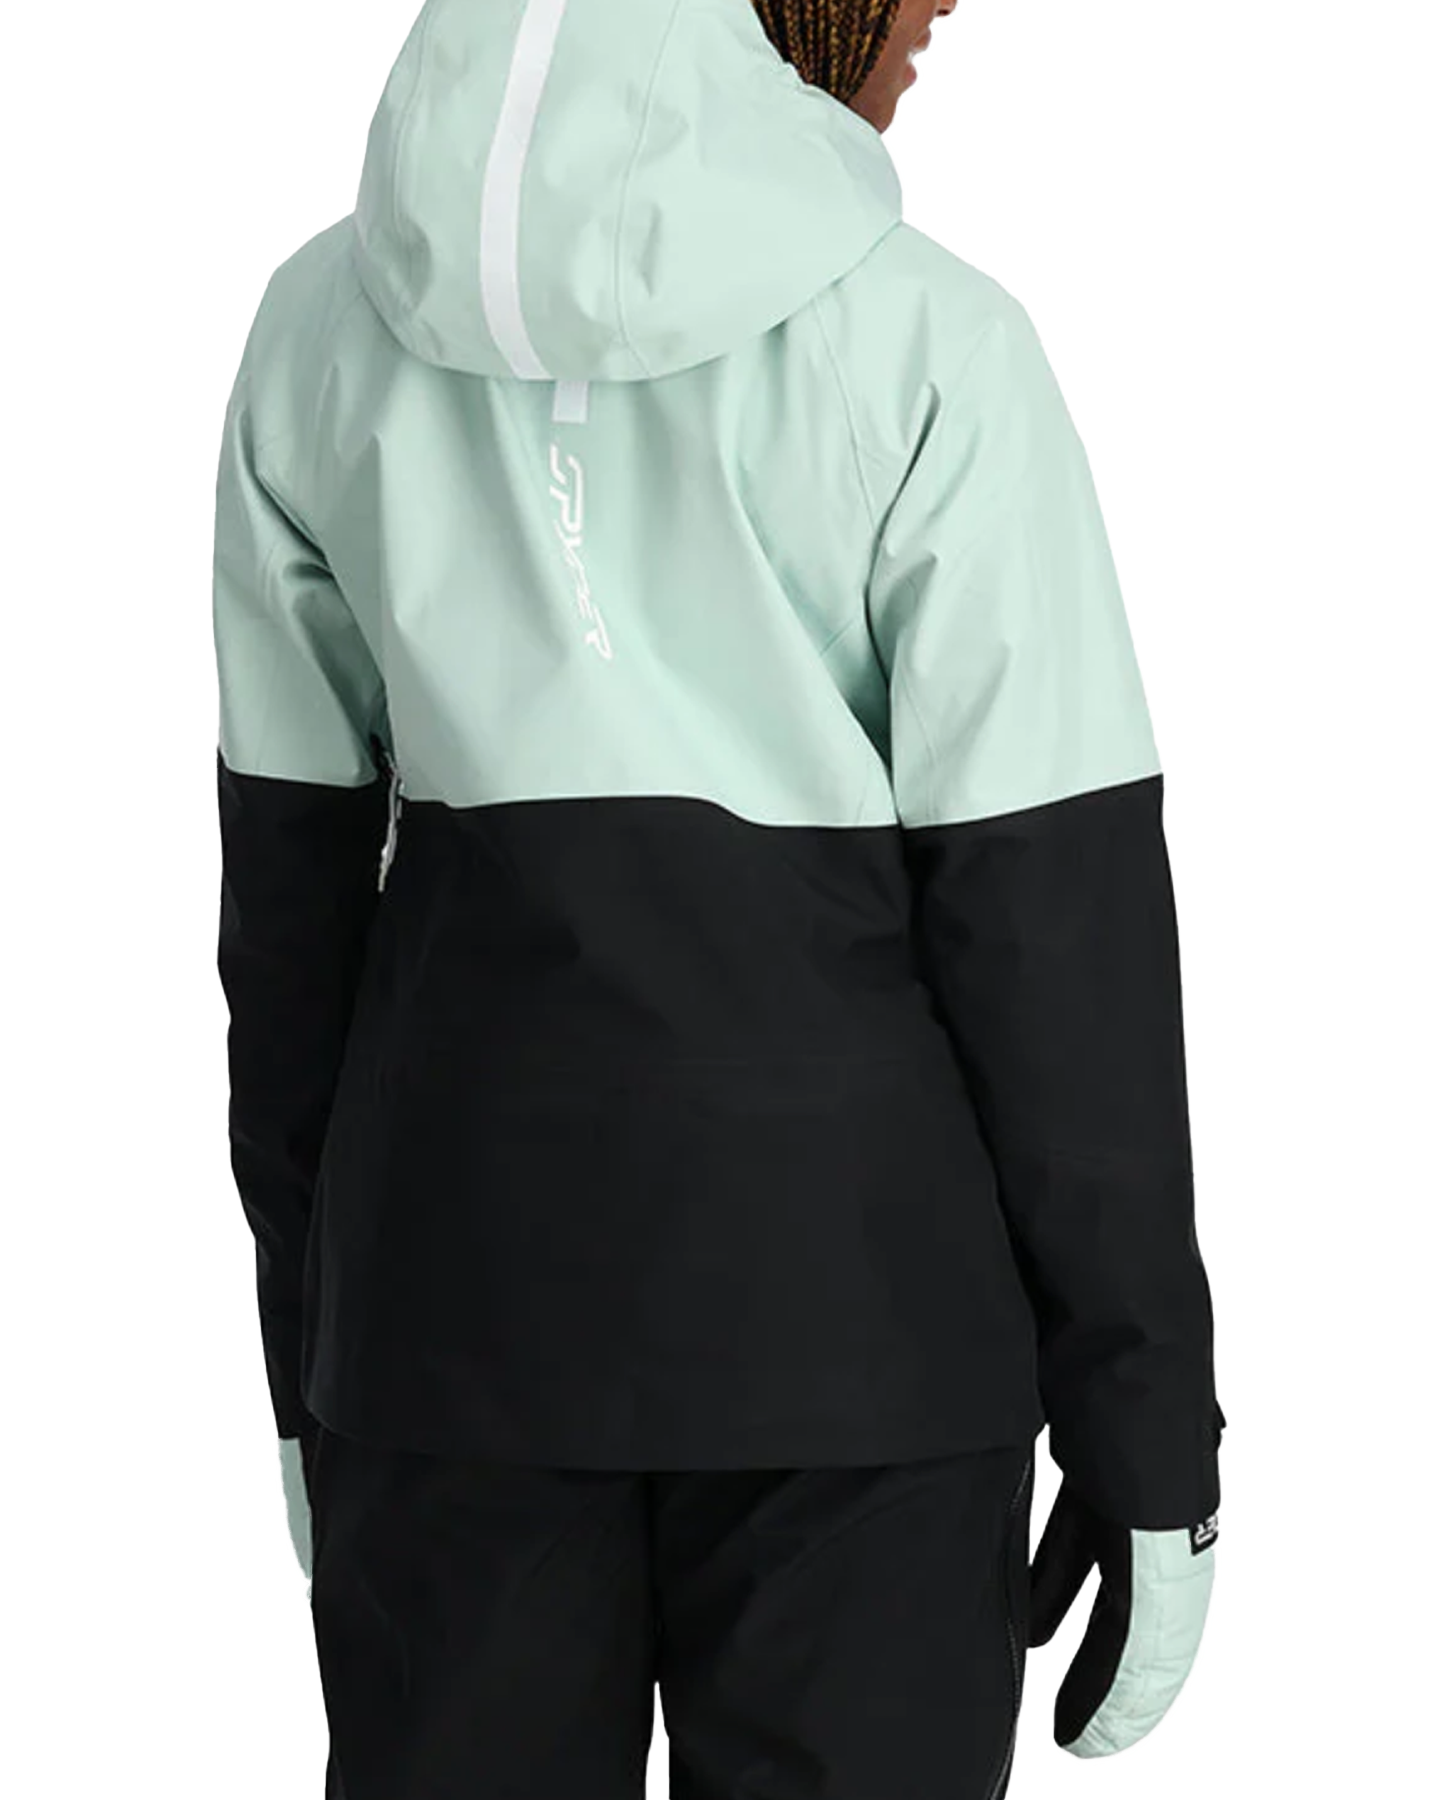 Spyder Women's Solitaire Gtx Shell Jacket - Wintergreen Women's Snow Jackets - SnowSkiersWarehouse